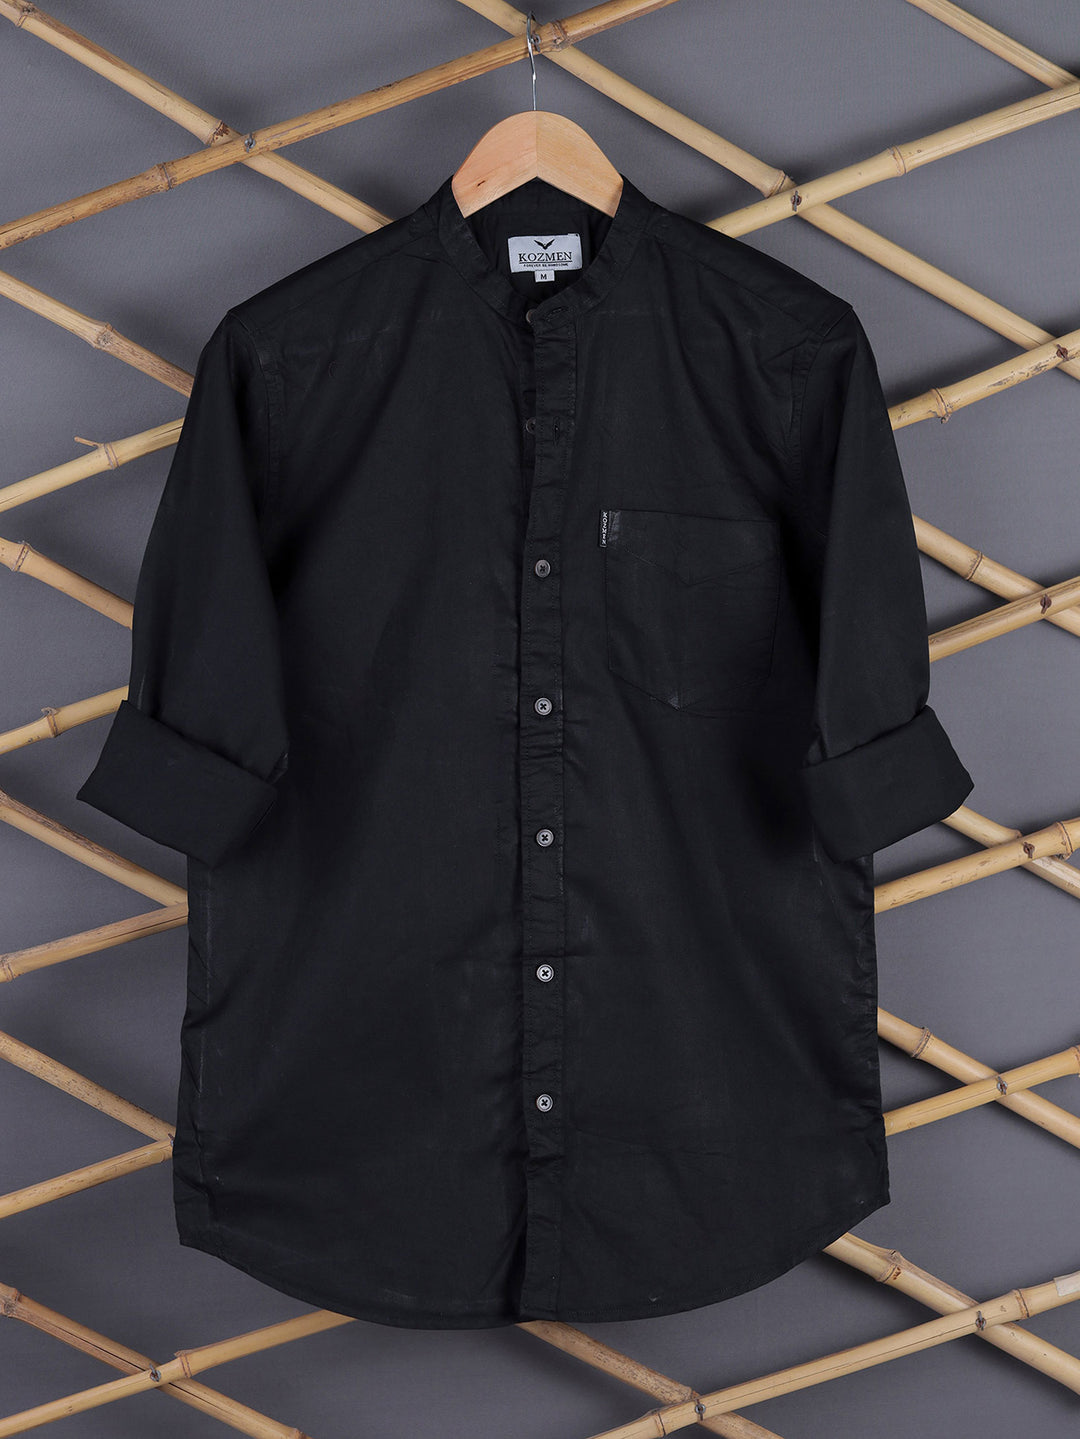 Charcoal Black Premium Super Soft Solid Cotton Mandarin Collar Shirt